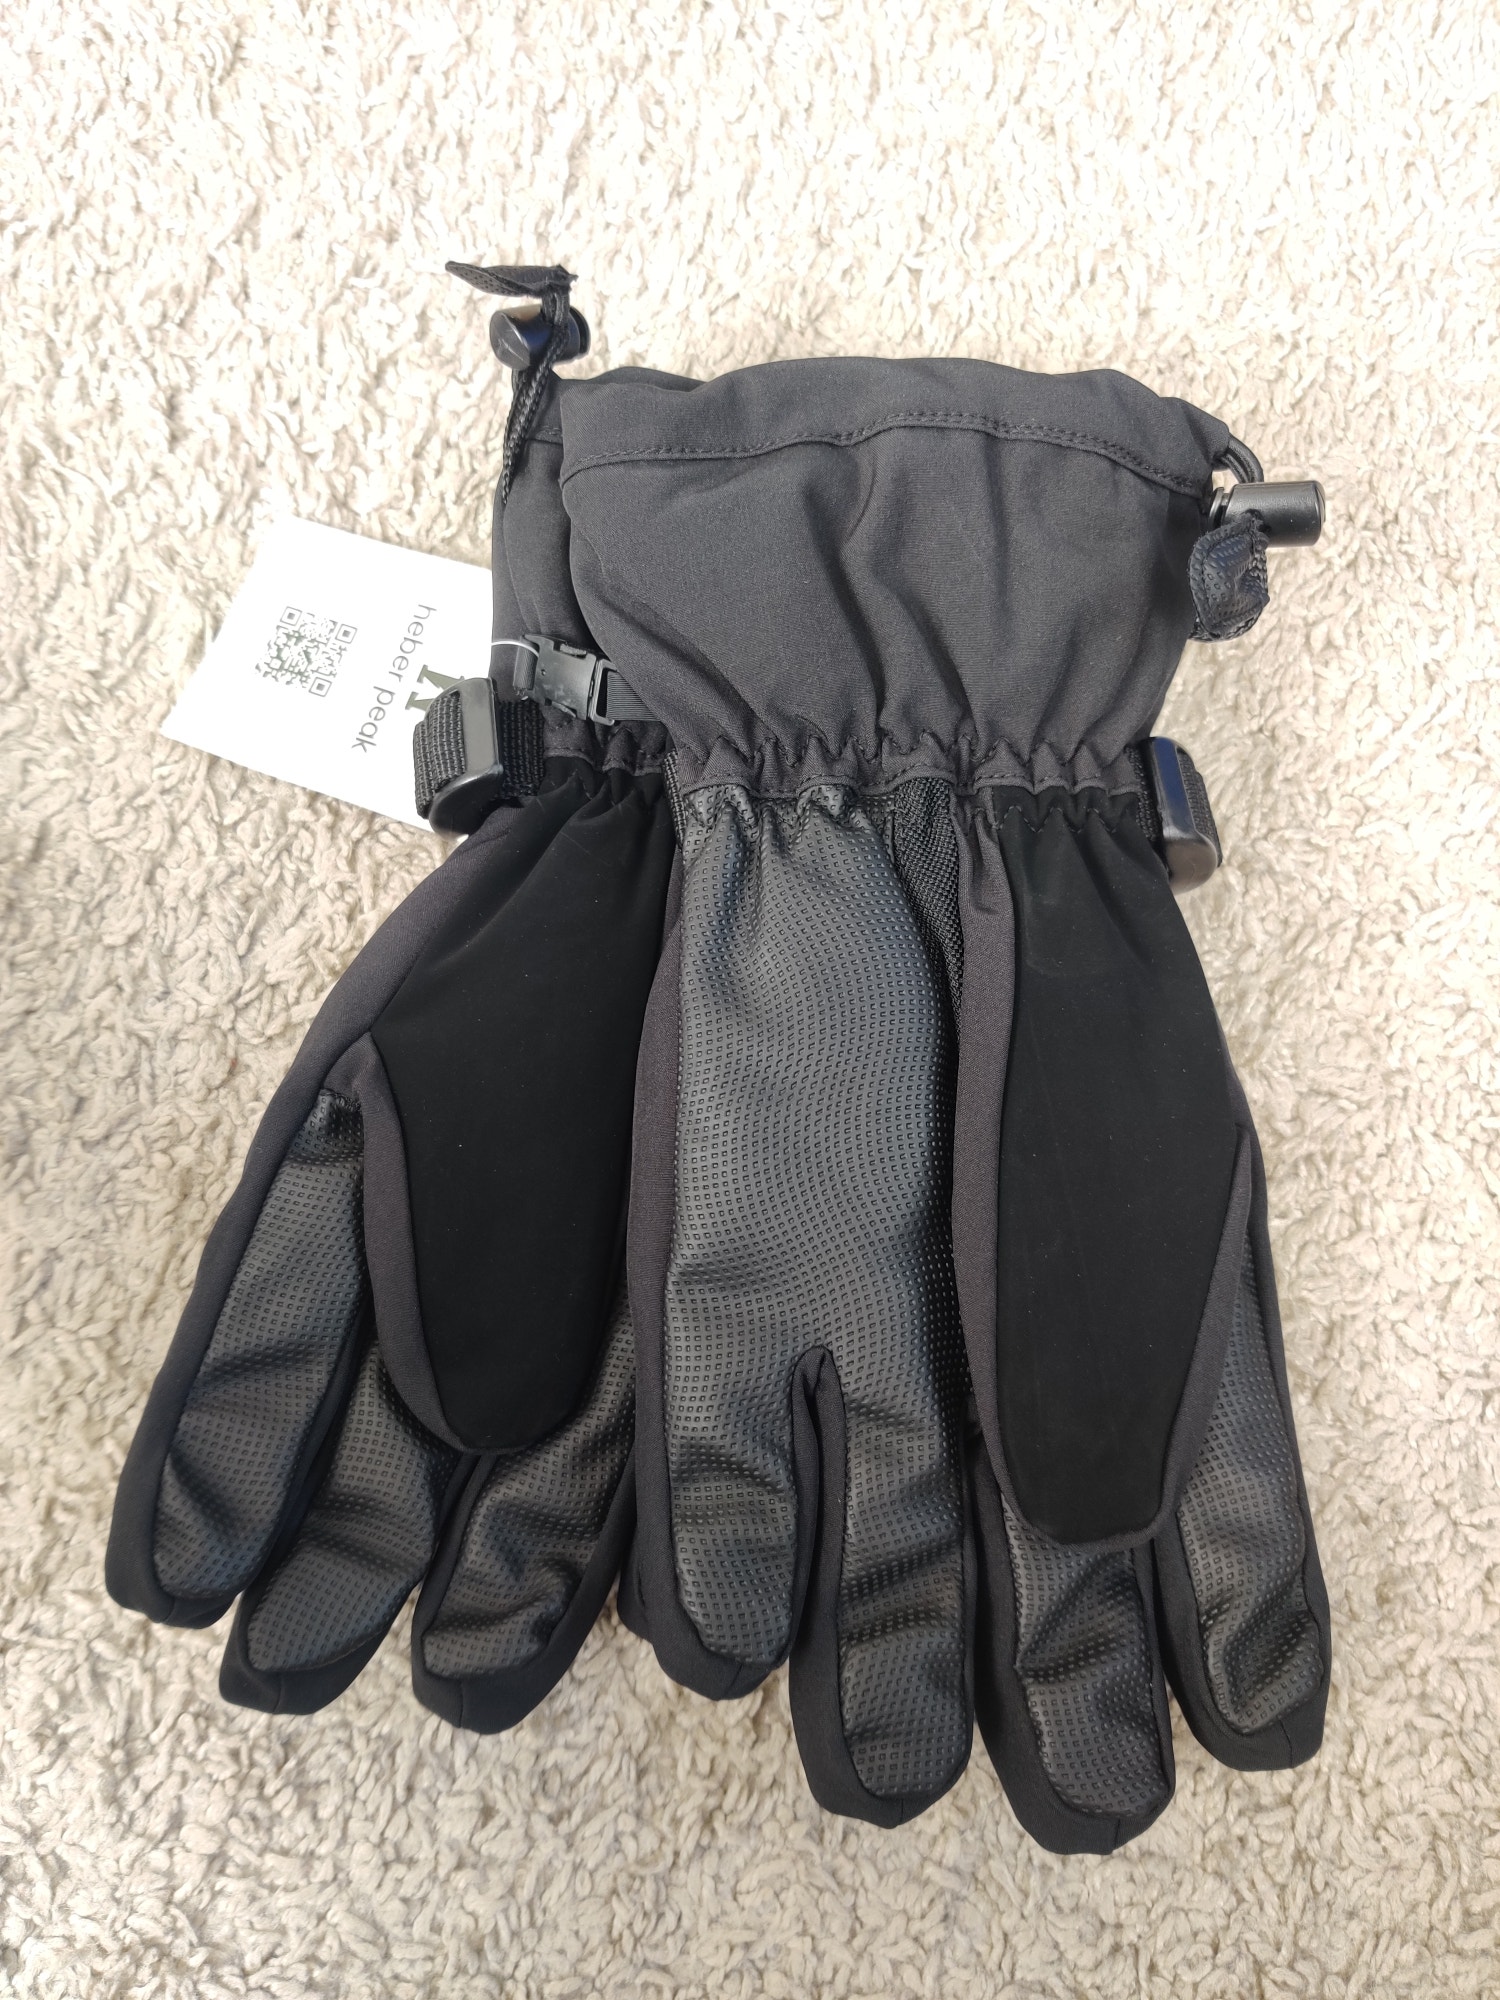 (V) Heber Peak Viggest 5 Finger Glove MEN'S SKI AND SNOW WATERPROOF MITTENS SZ 9 - Picture 4 of 10